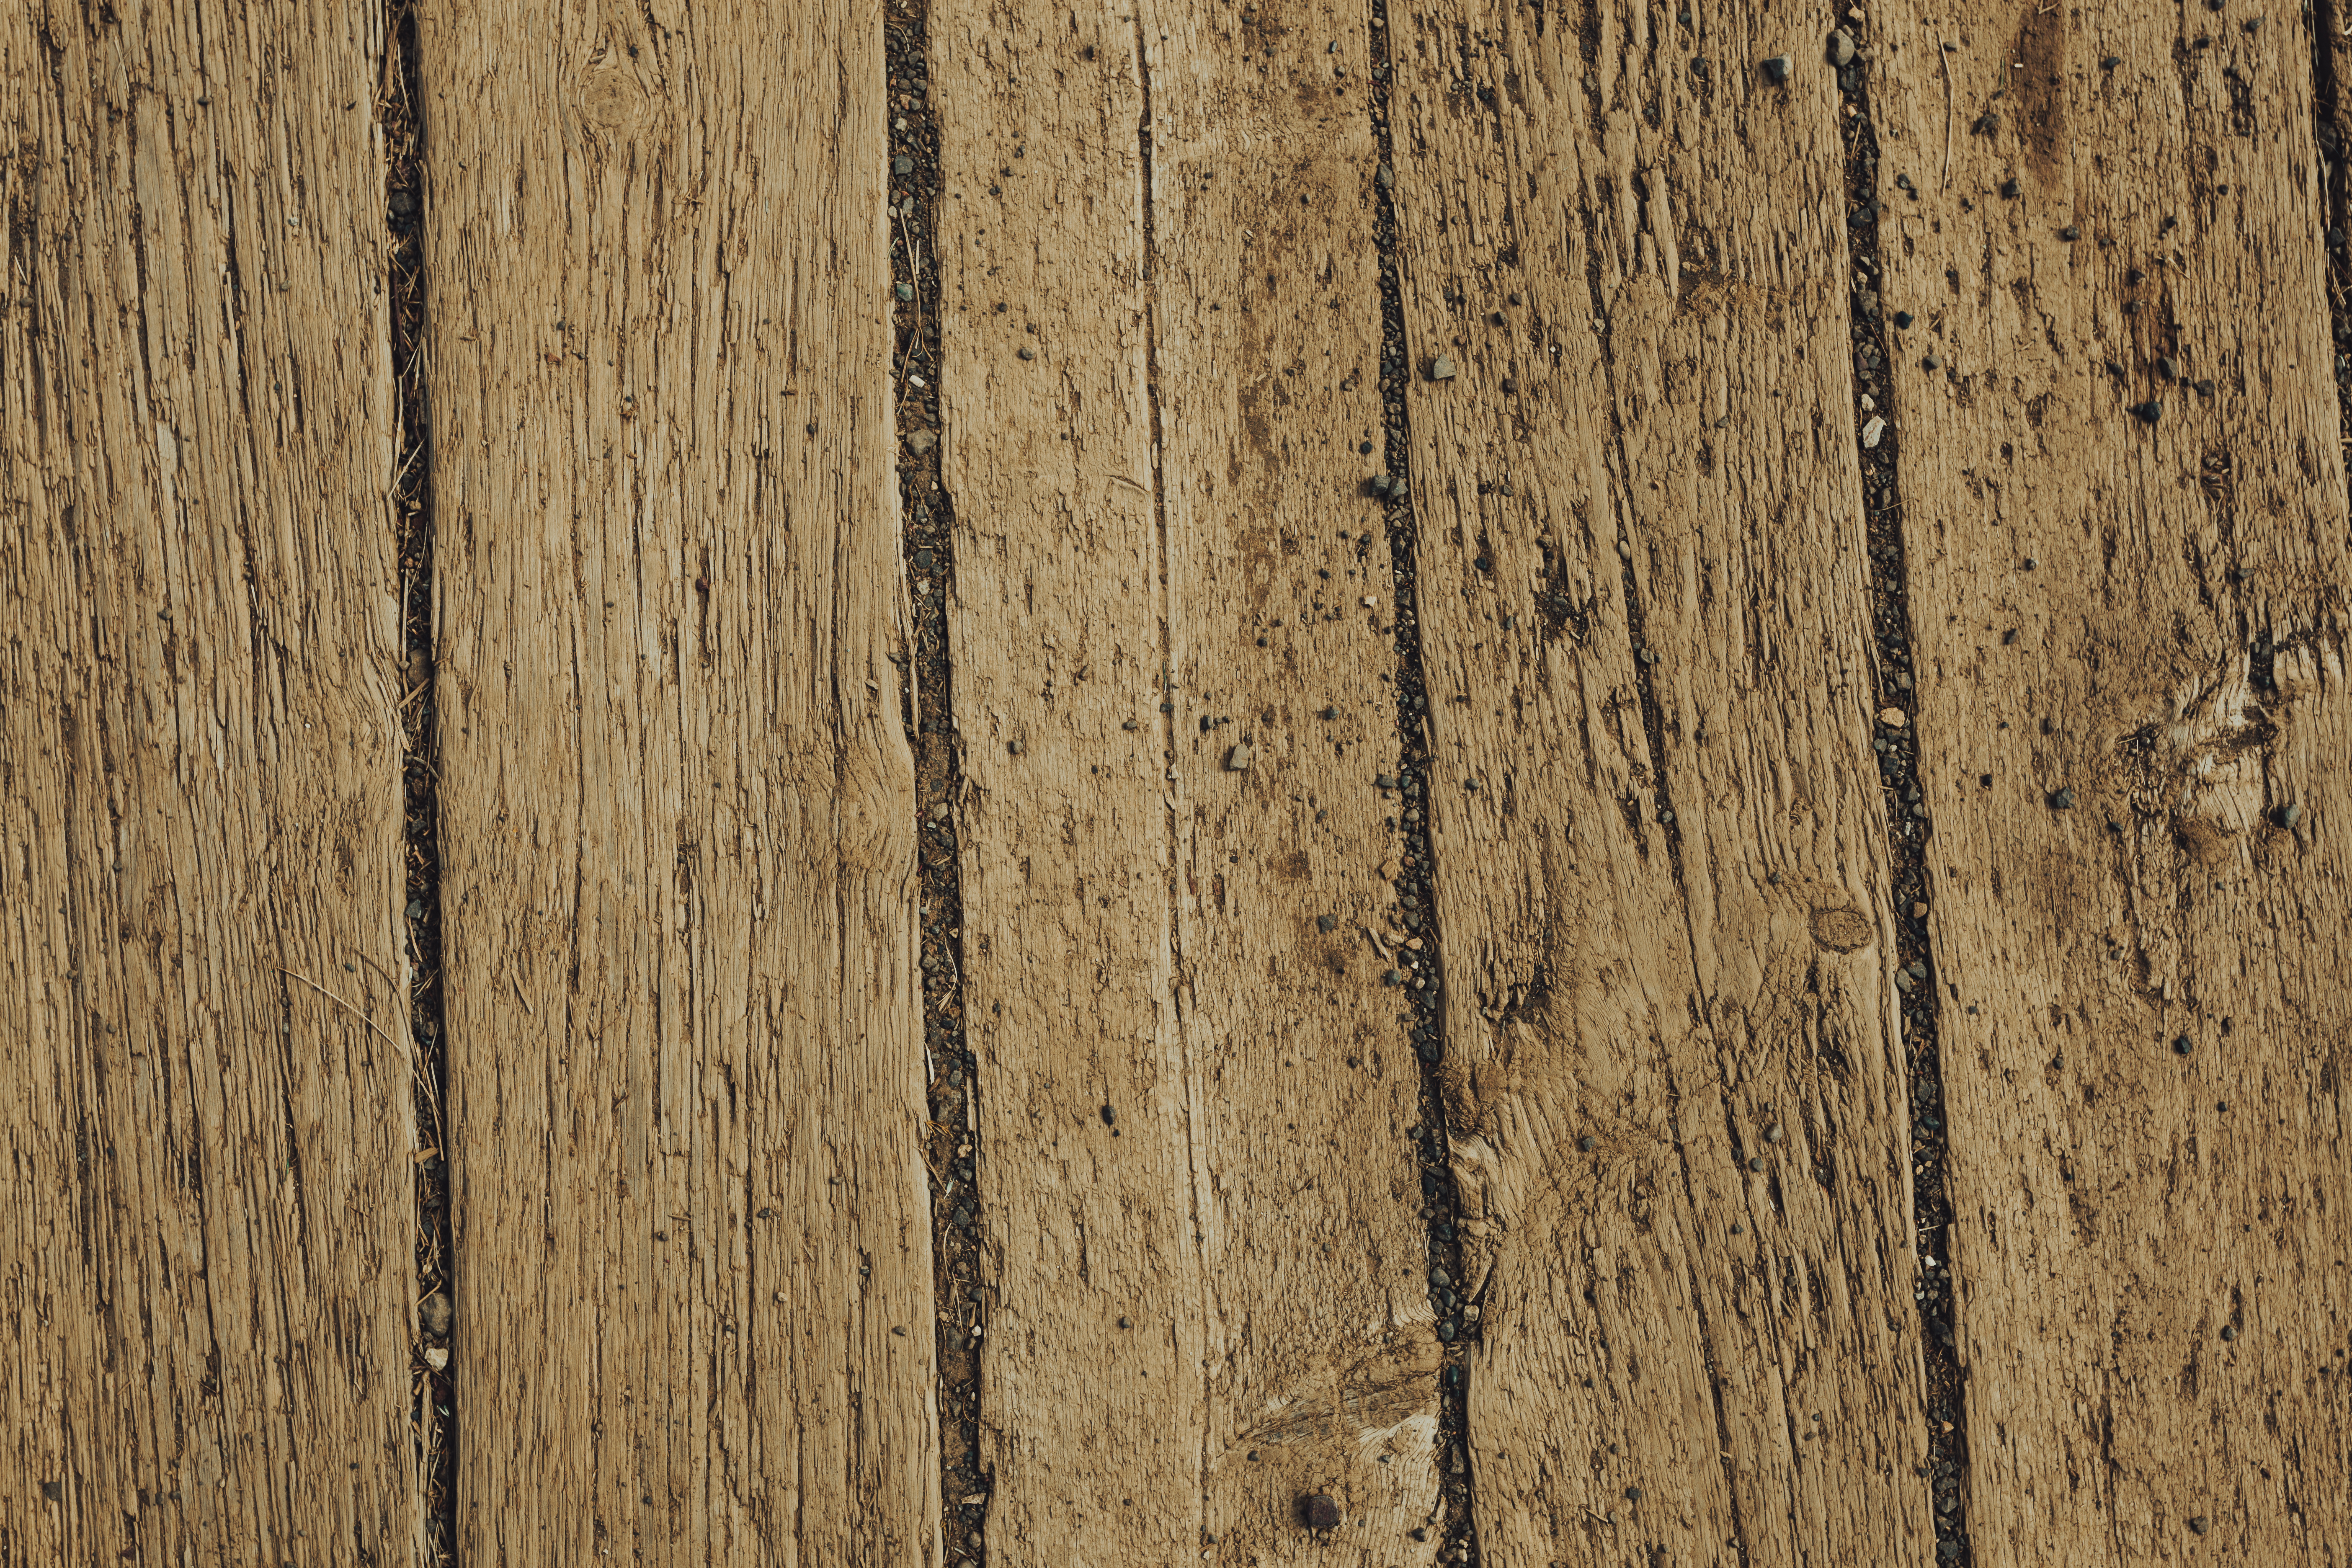 Free Worn Wood Textures | Freebies | Stockvault.net Blog